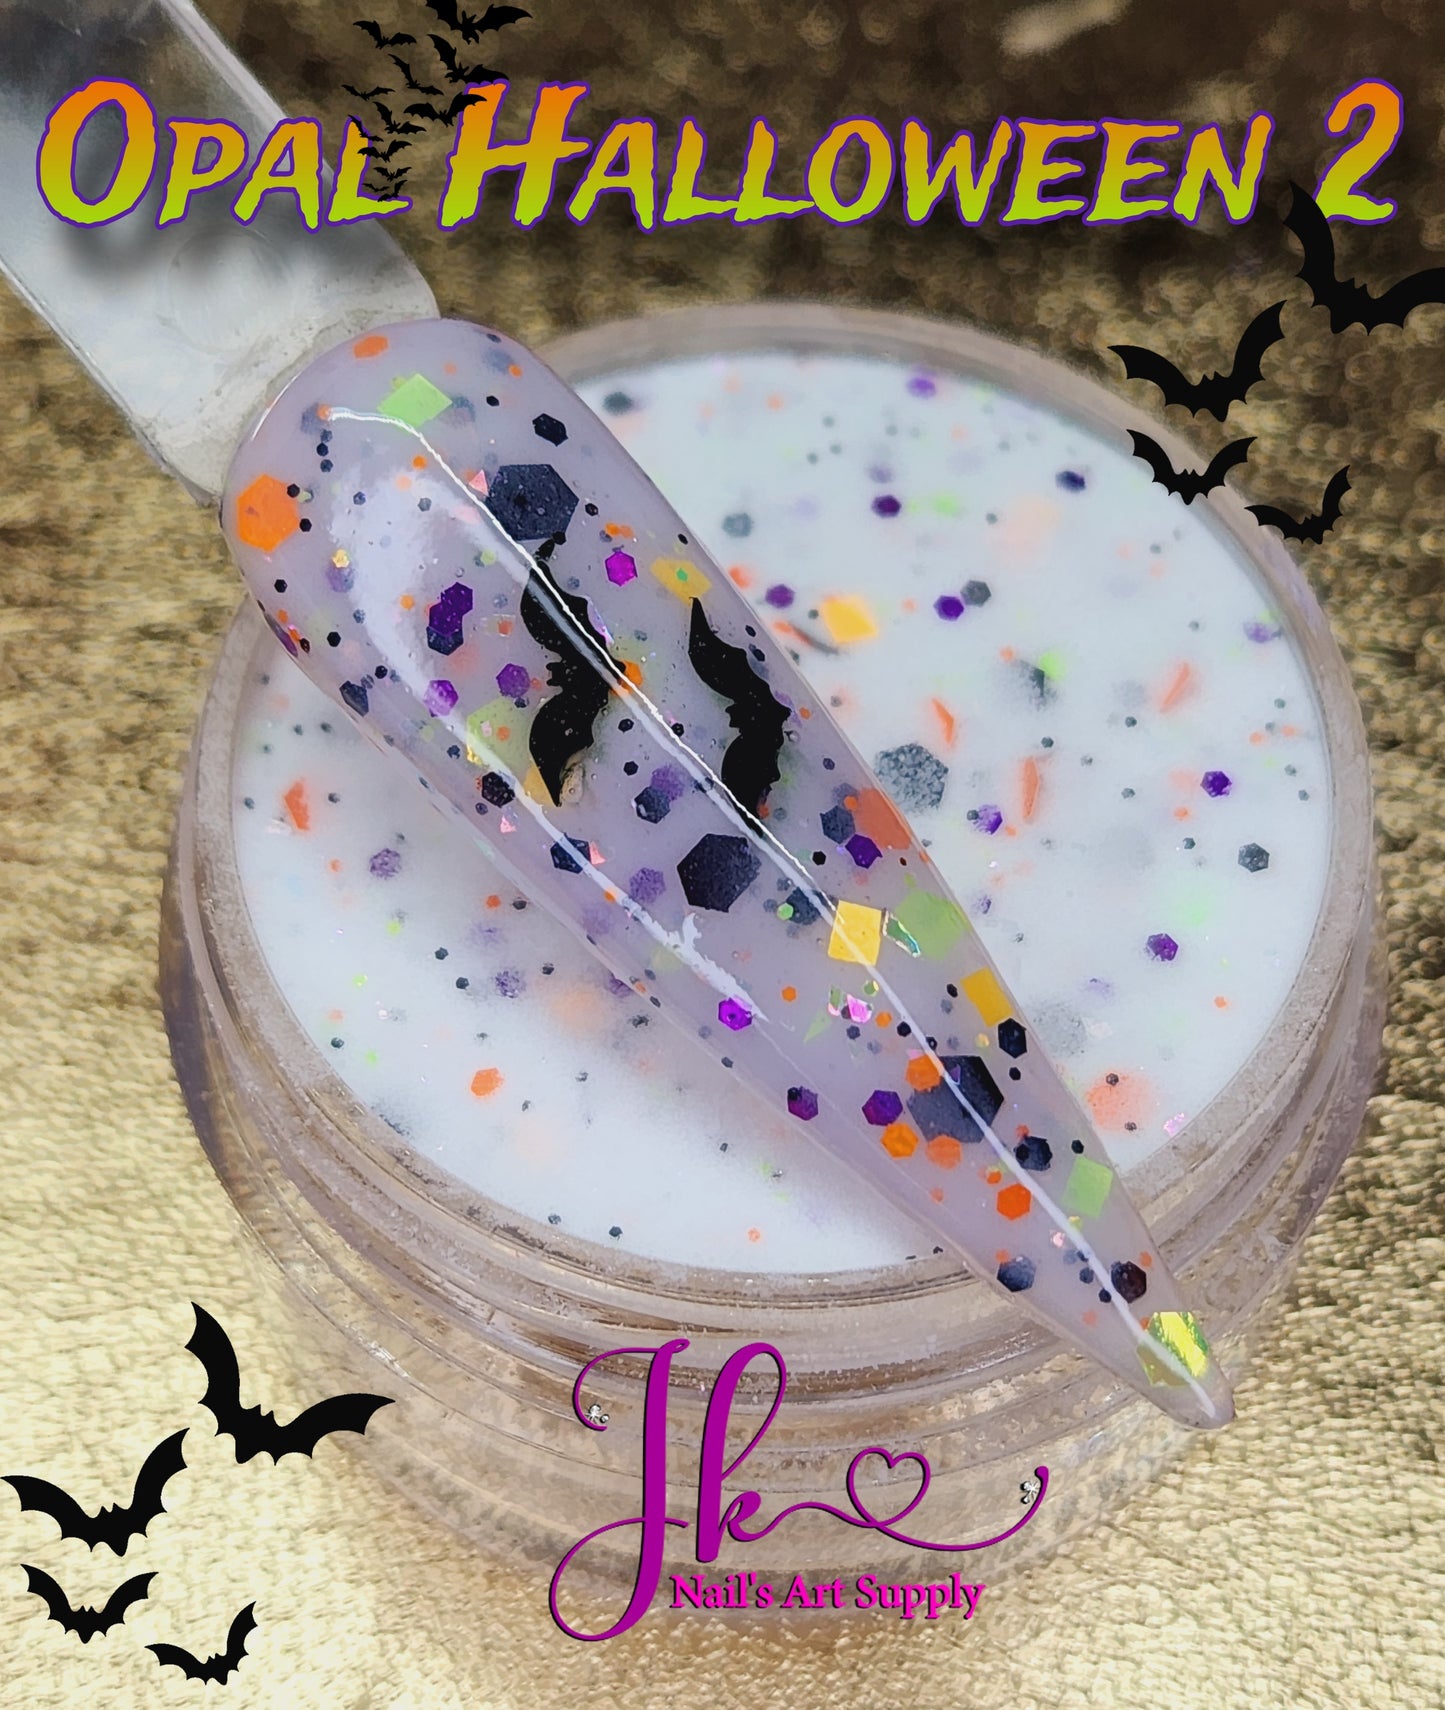 Opal Halloween 2